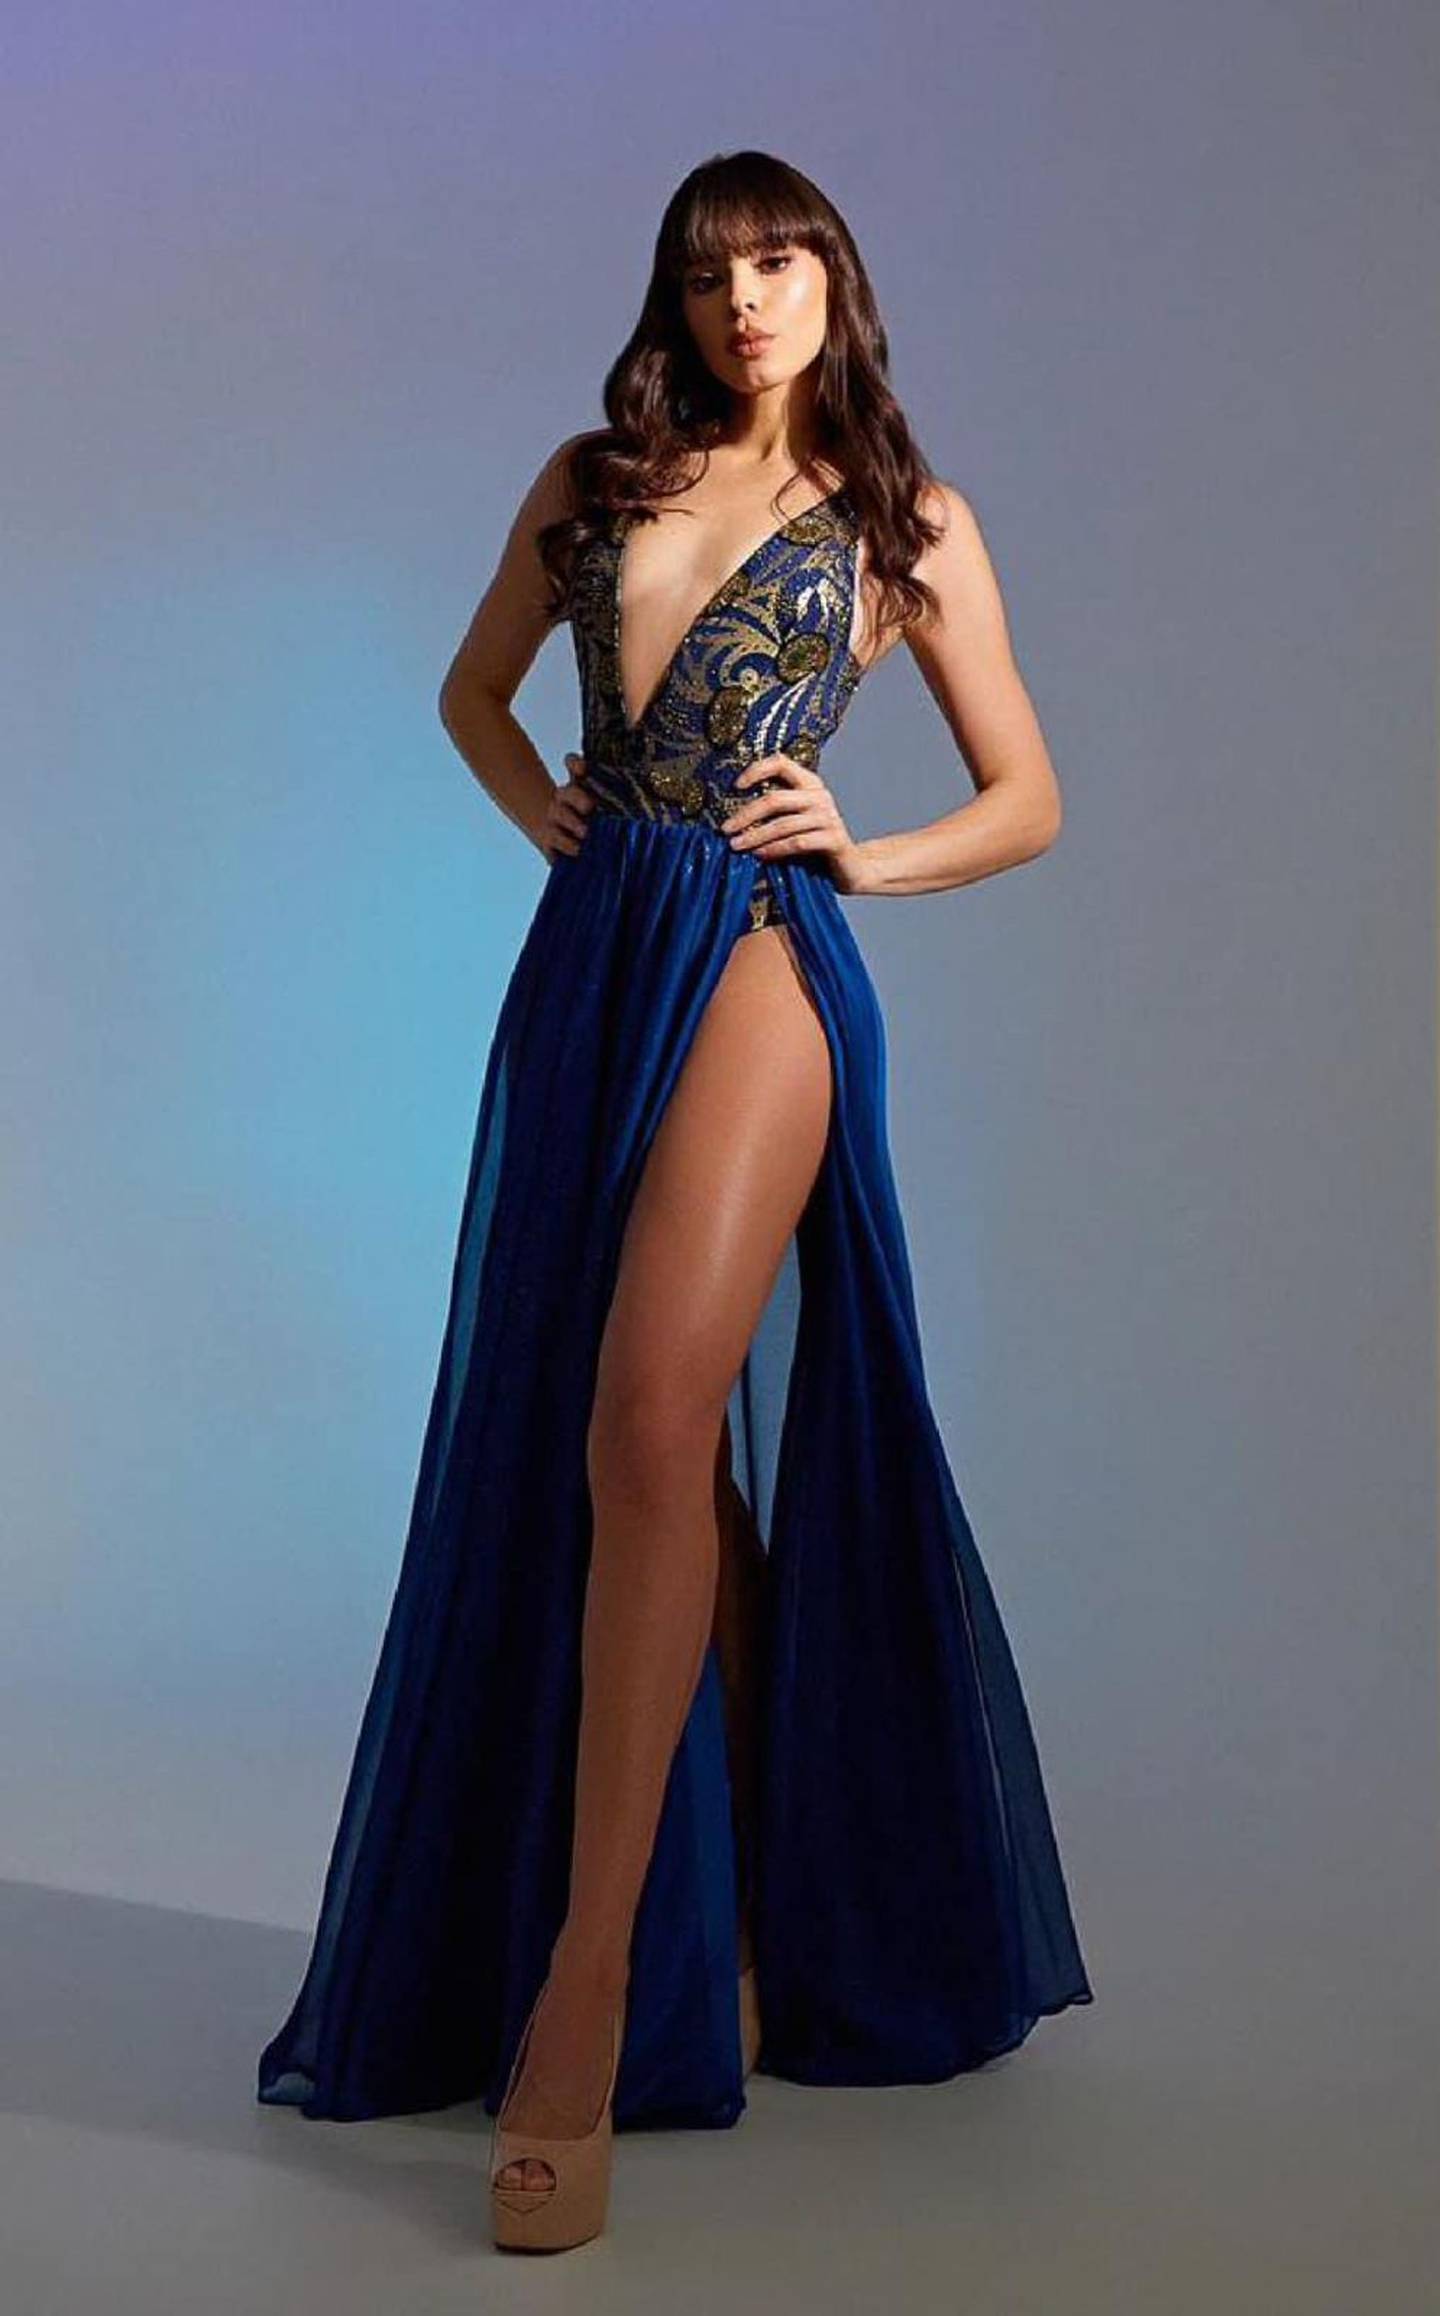 Miss Universe Costa Rica